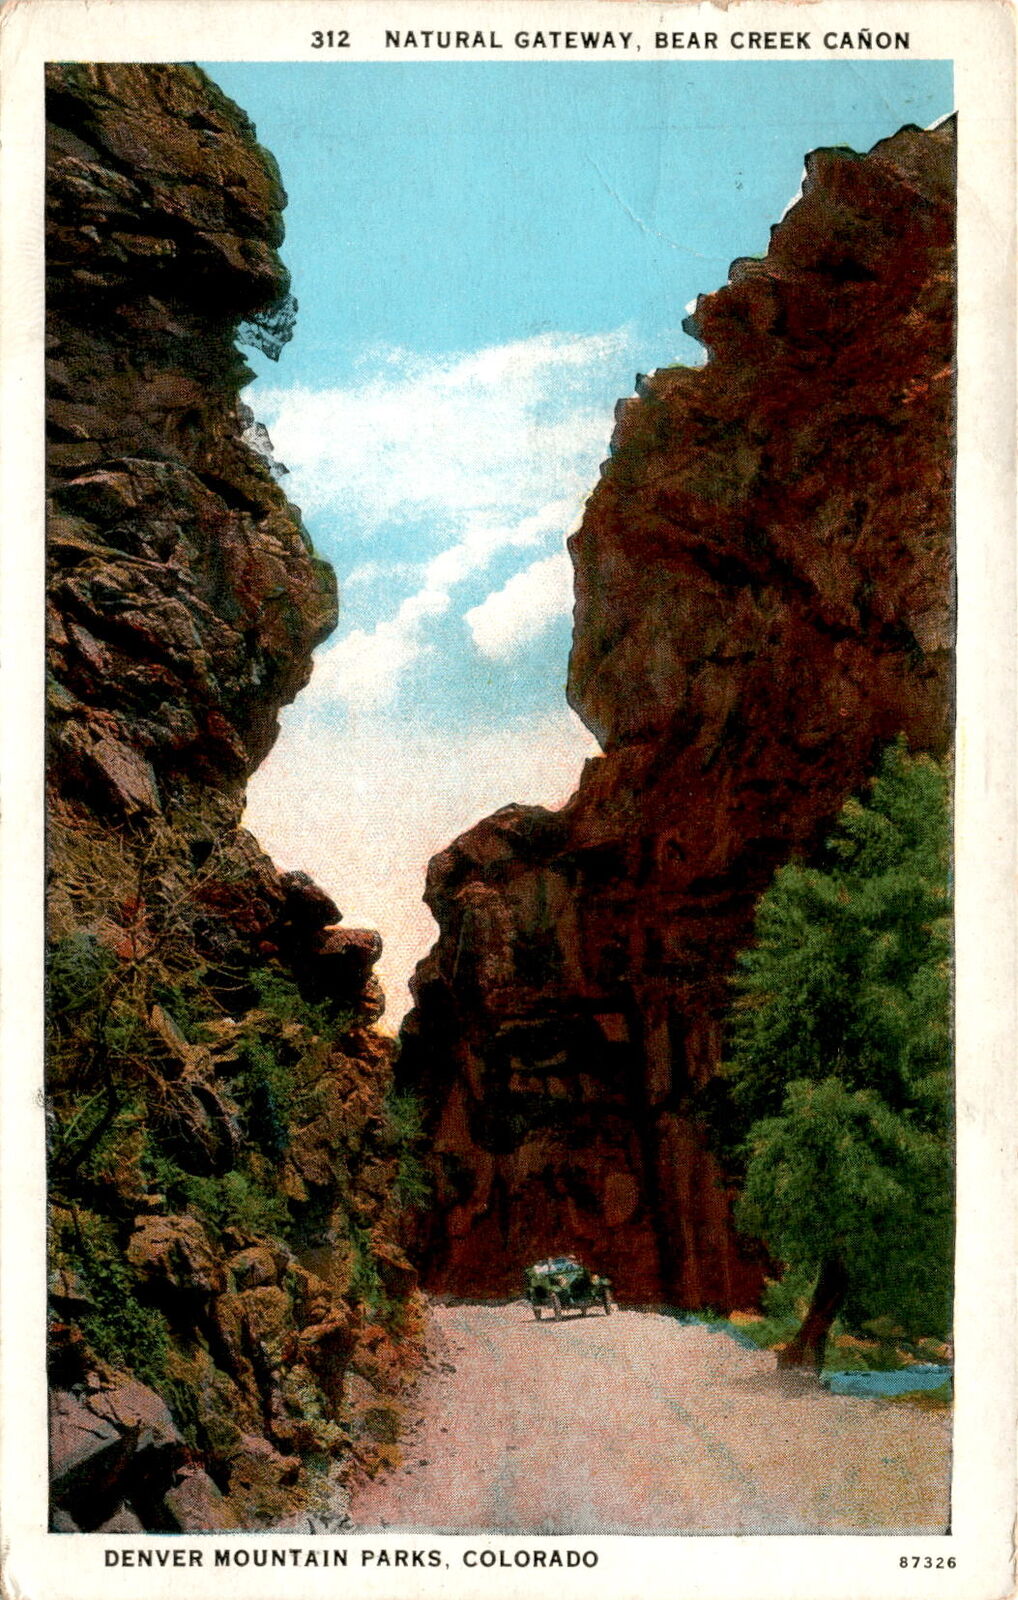 Denver Mountain Parks Natural Gateway Bear Creek Caon Colorado natural Postcard